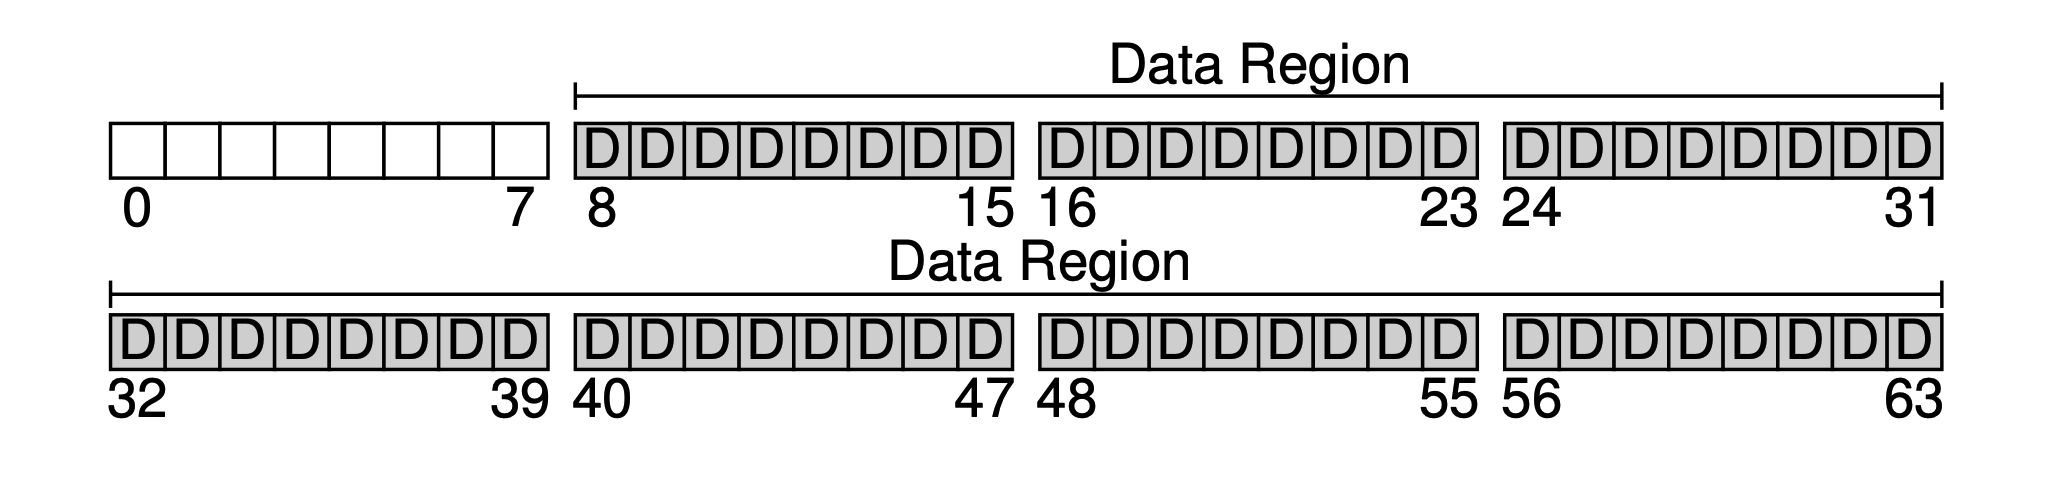 filesystem-data-region.png